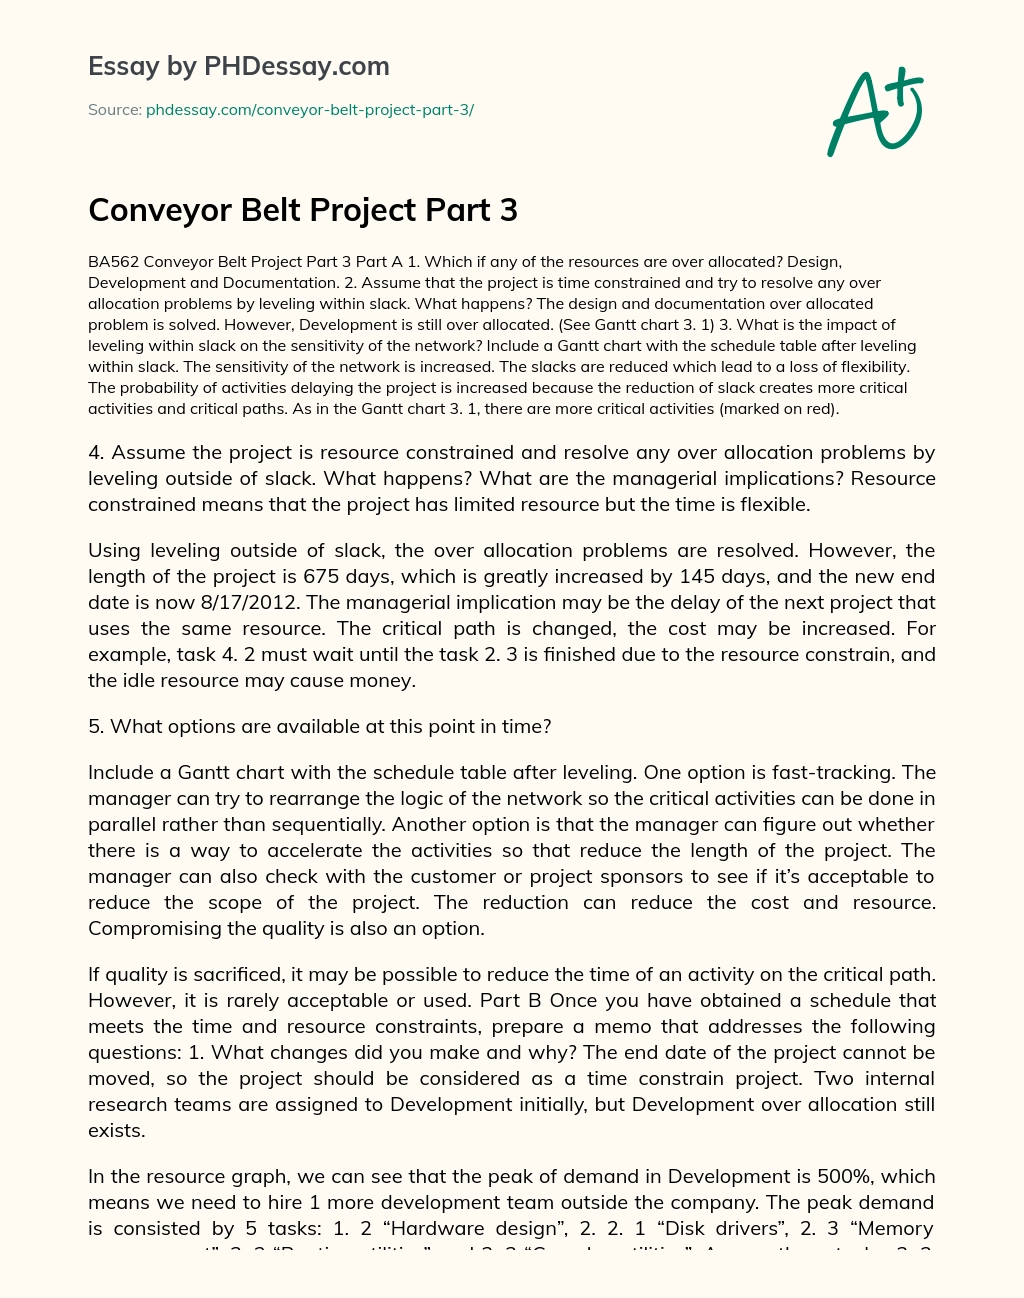 Conveyor Belt Project Part 3 essay